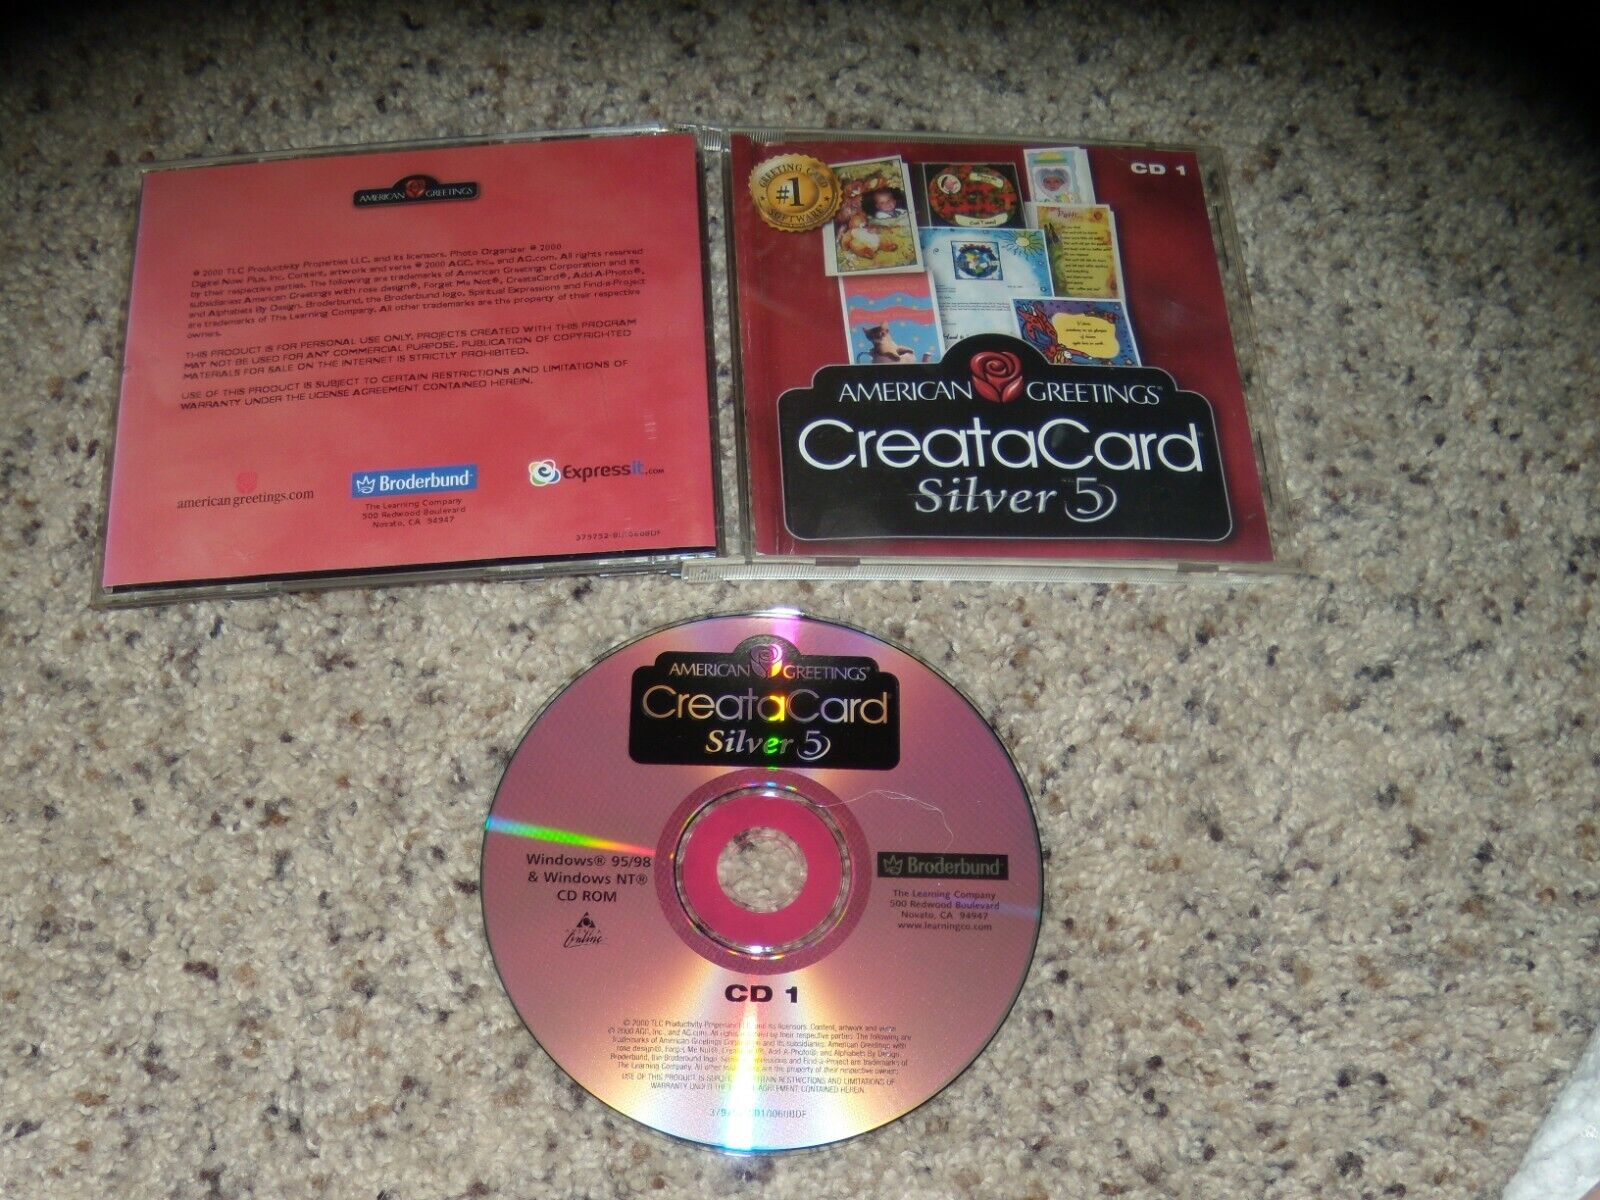 American Greetings Creatacard Silver 5 CD 1 Mint PC Program 